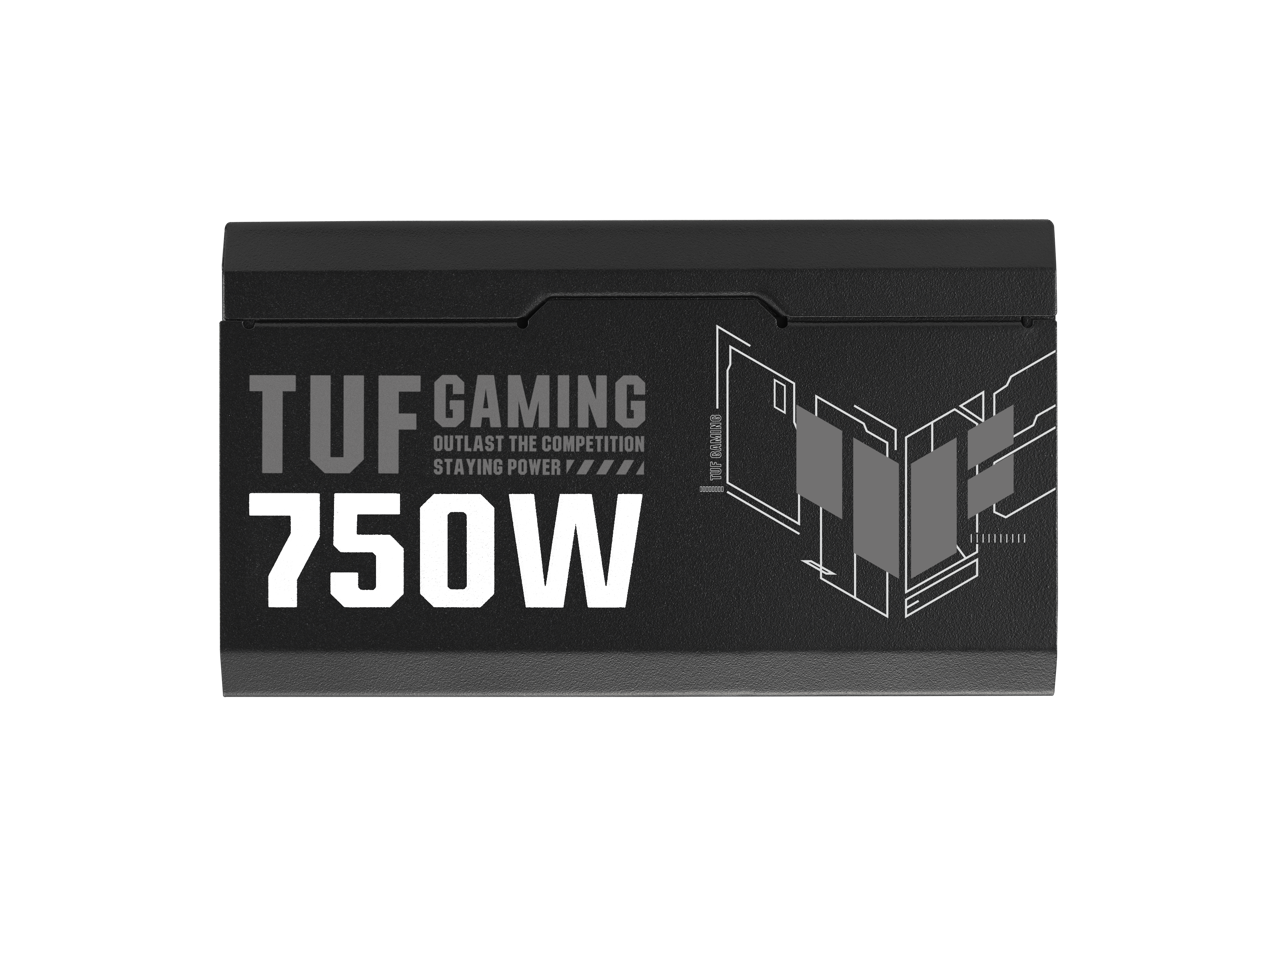 ASUS TUF Gaming 750W Gold (750 Watt, Fully Modular Power Supply, 80+ Gold Certified, ATX 3.0 Compatible, Military-grade Components, Dual Ball Bearing, Axial-tech Fan, PCB Coating)